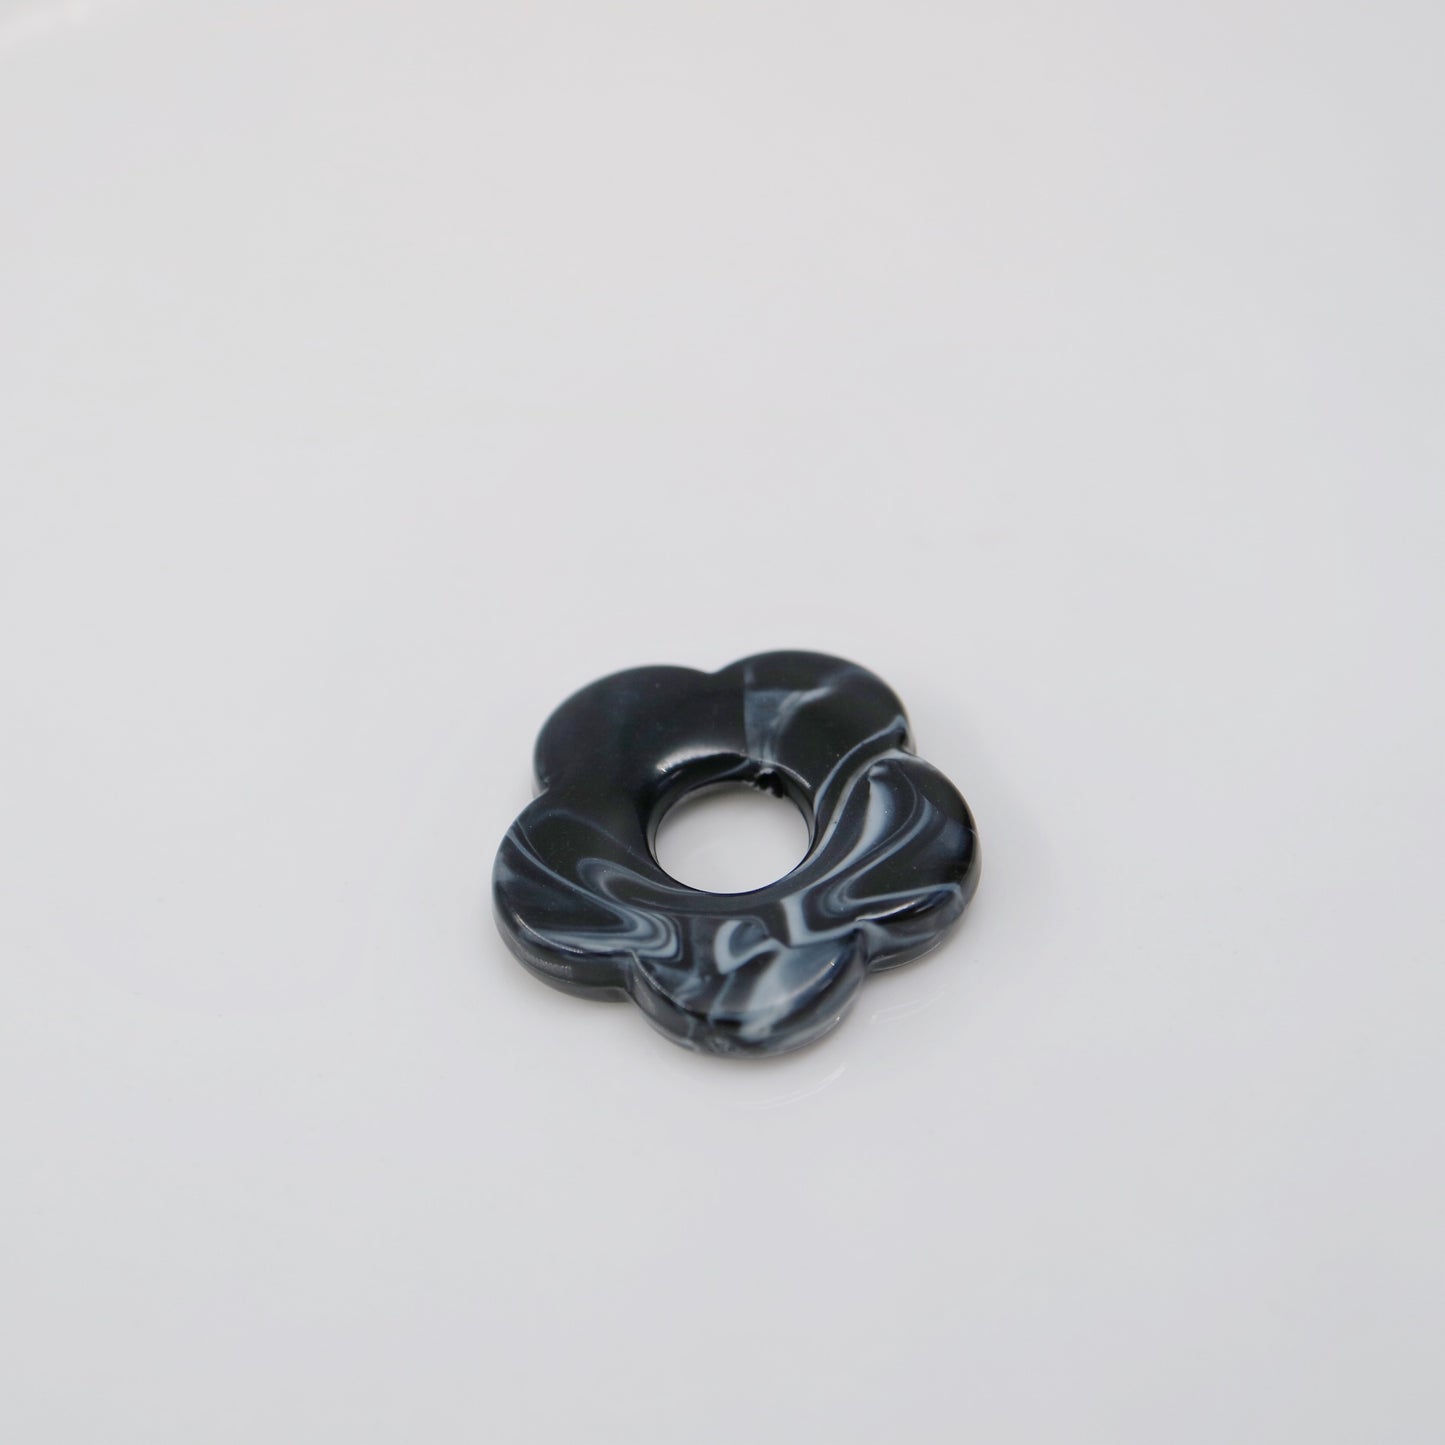 Flower Power Acrylic Charm in black swirl